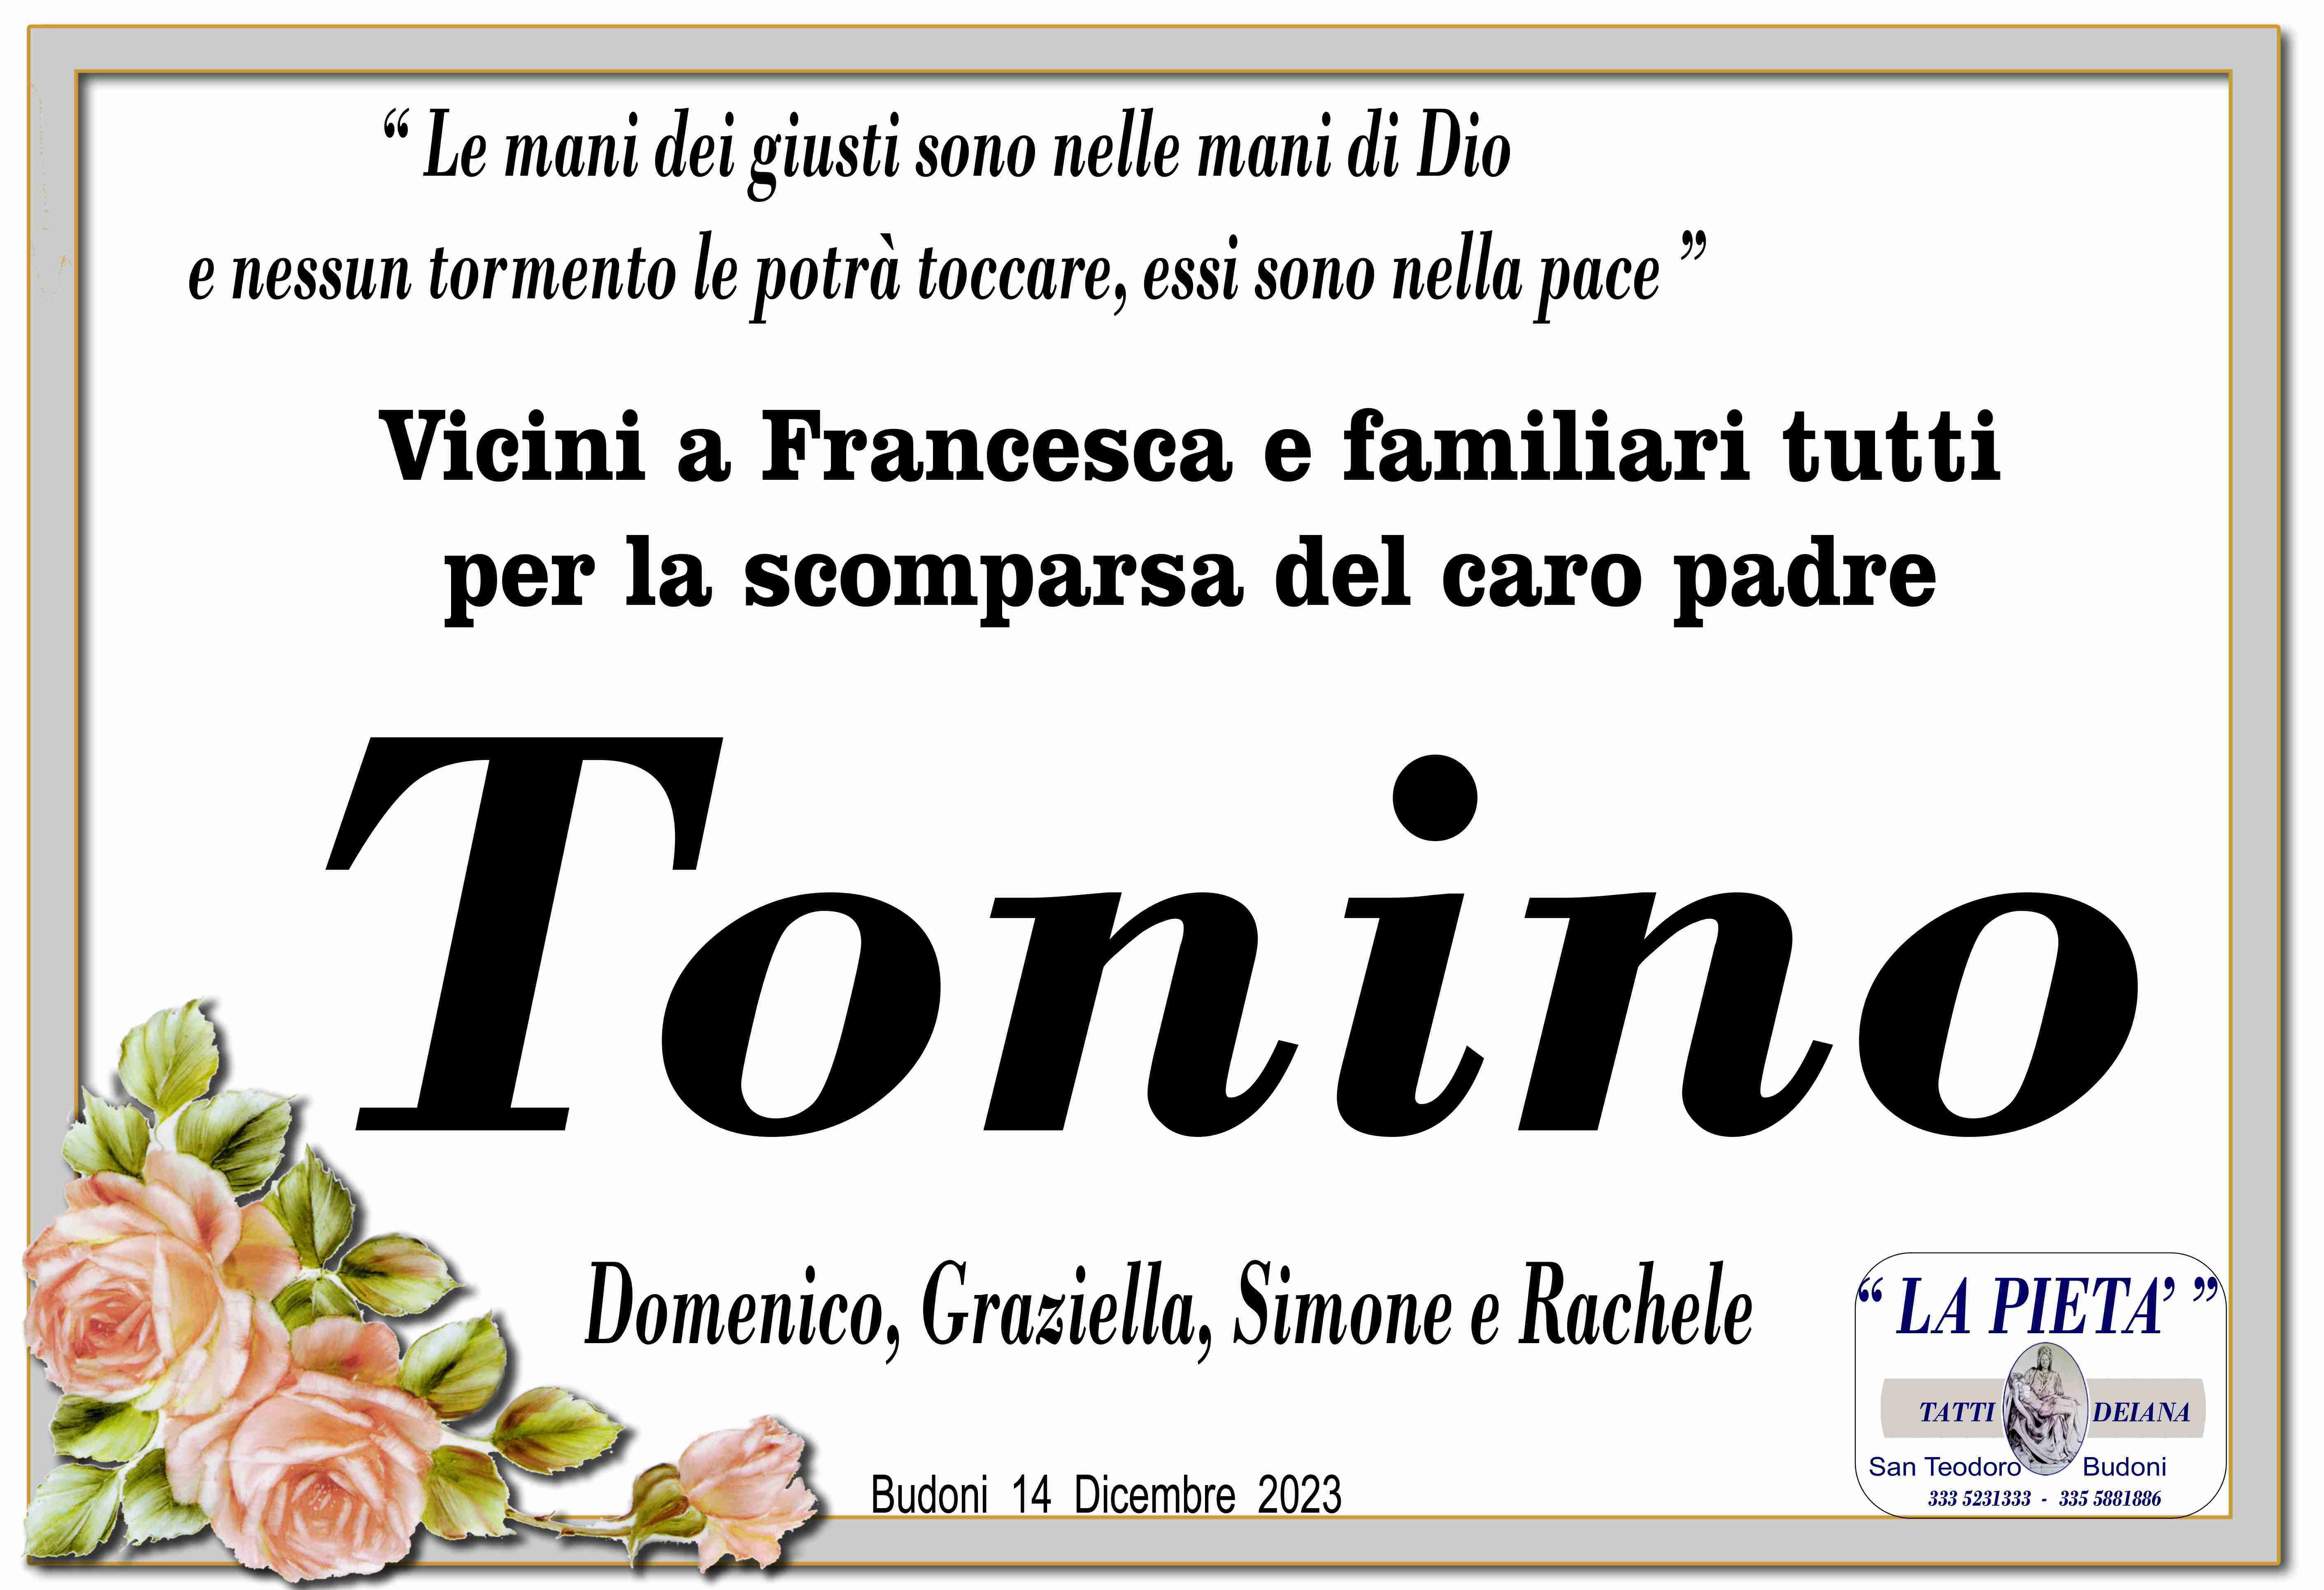 Tonino Bacciu